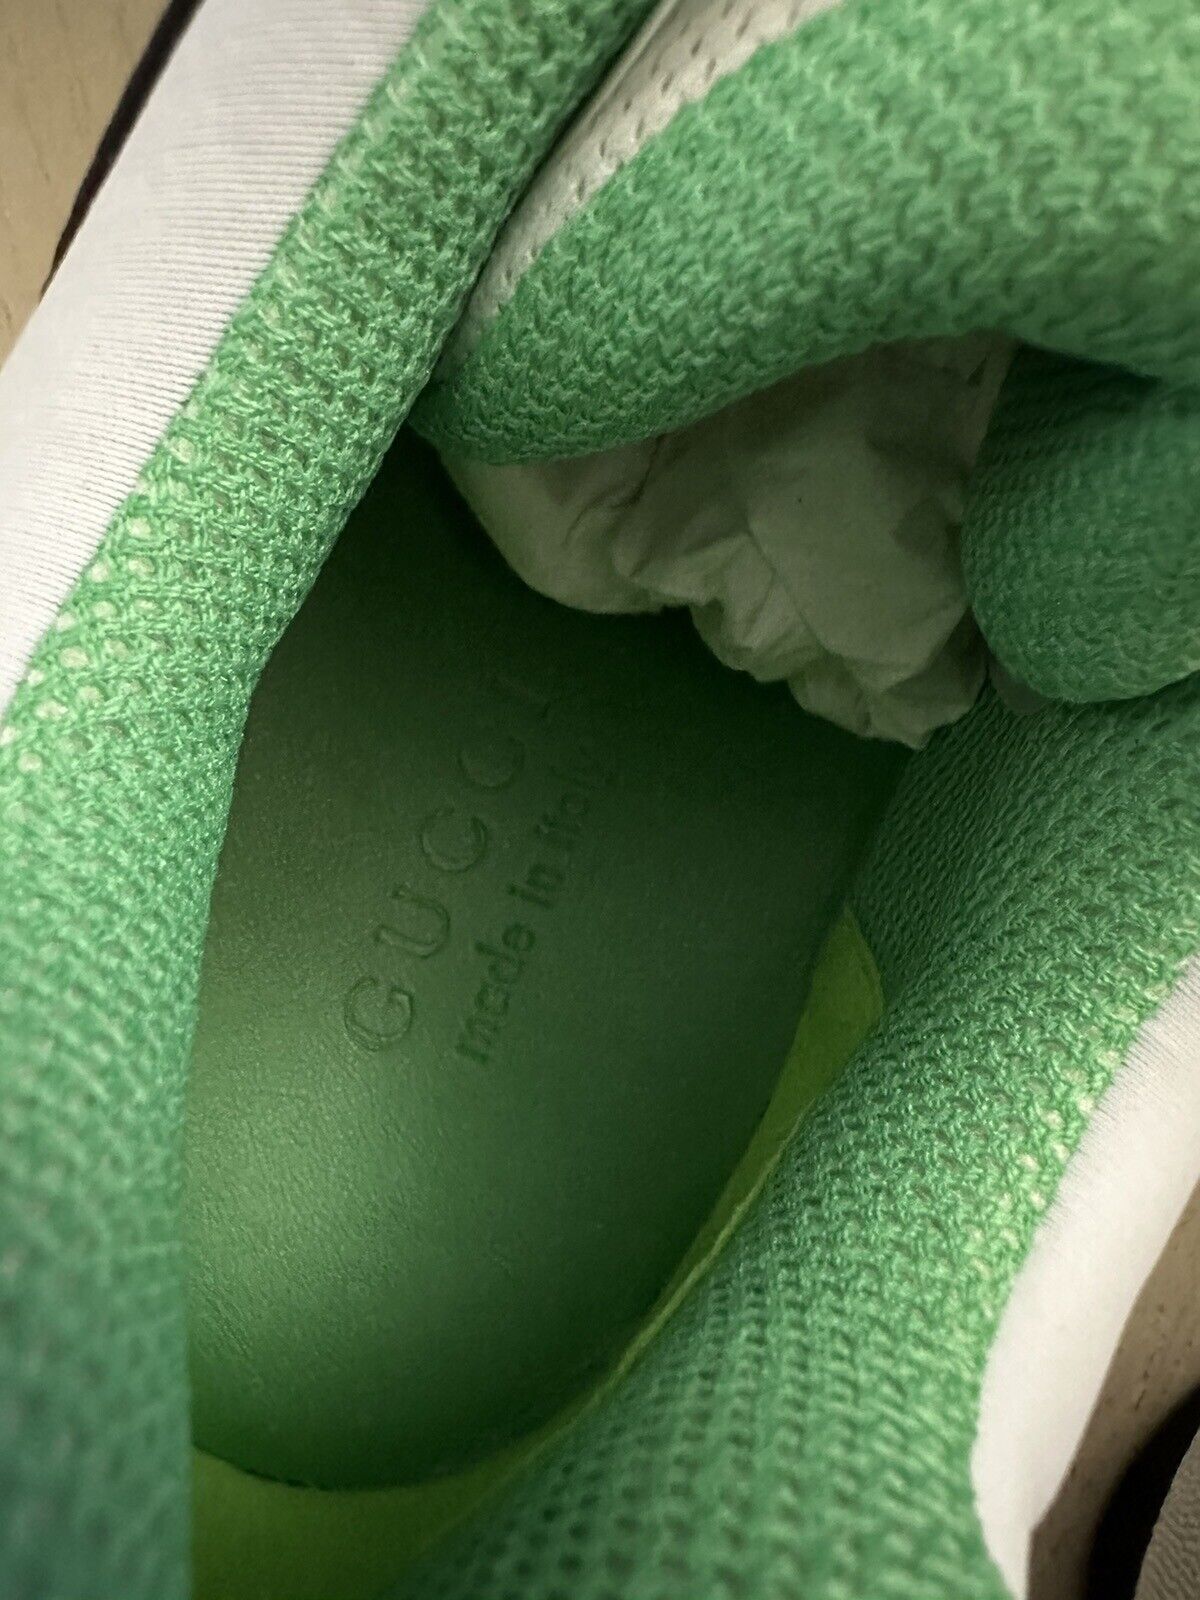 Gucci Men Demetra Basket Low Top Sneakers Green/Whi 9.5 US/9 UK 697882 New $995